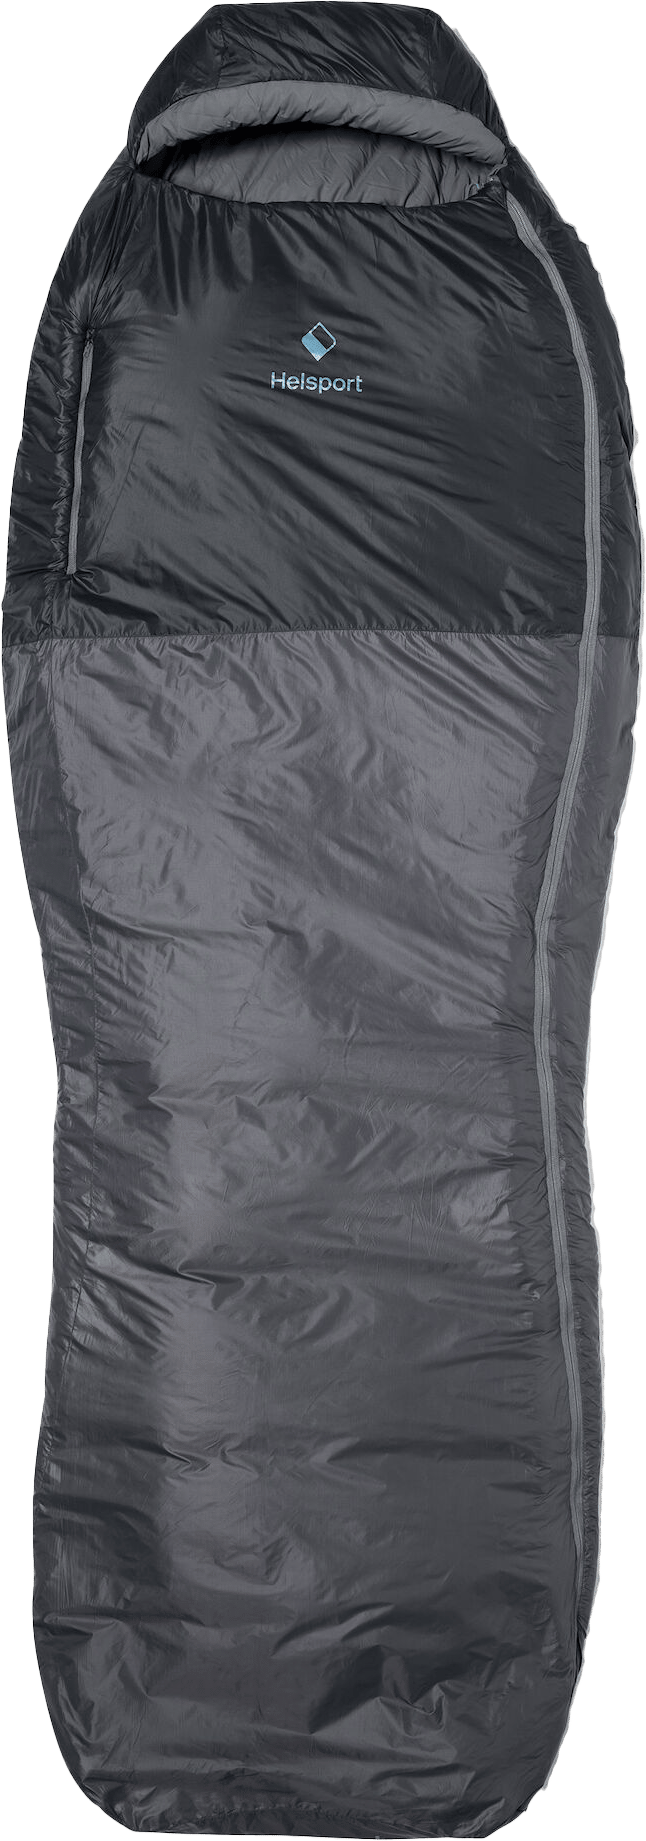 Helsport Challenger Comfort Fiber 0 Sleeping Bag 185cm Smoky Grey / Fjord Blue Helsport